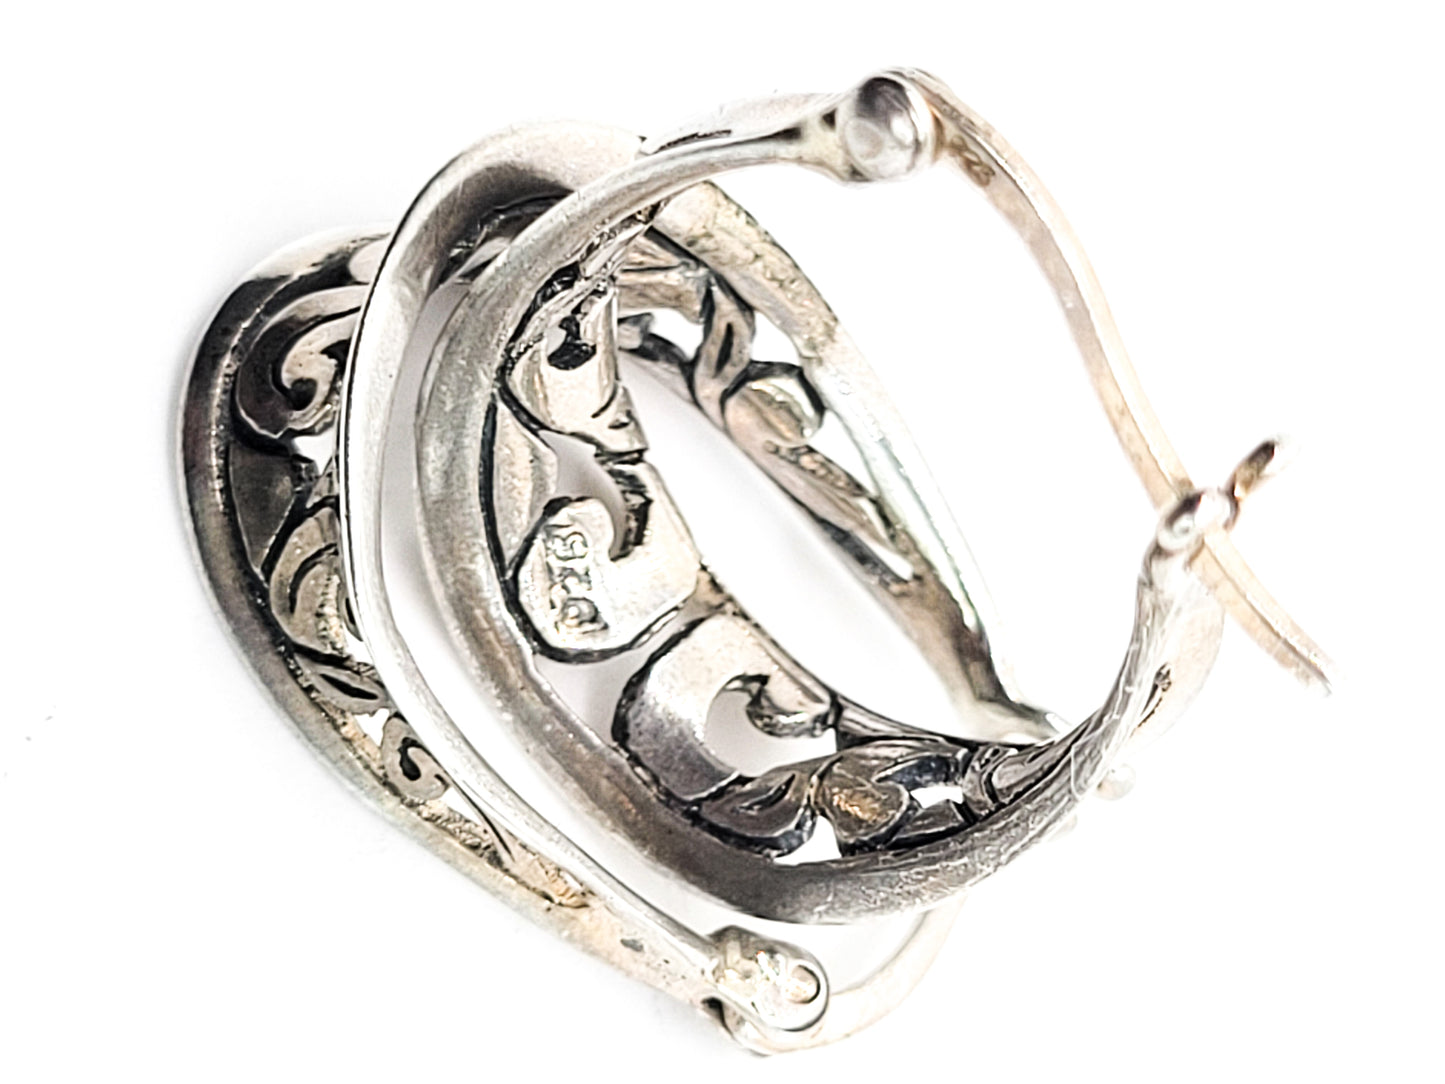 Tribal Balinese Bali style open work vintage thick sterling silver lever back hoop earrings